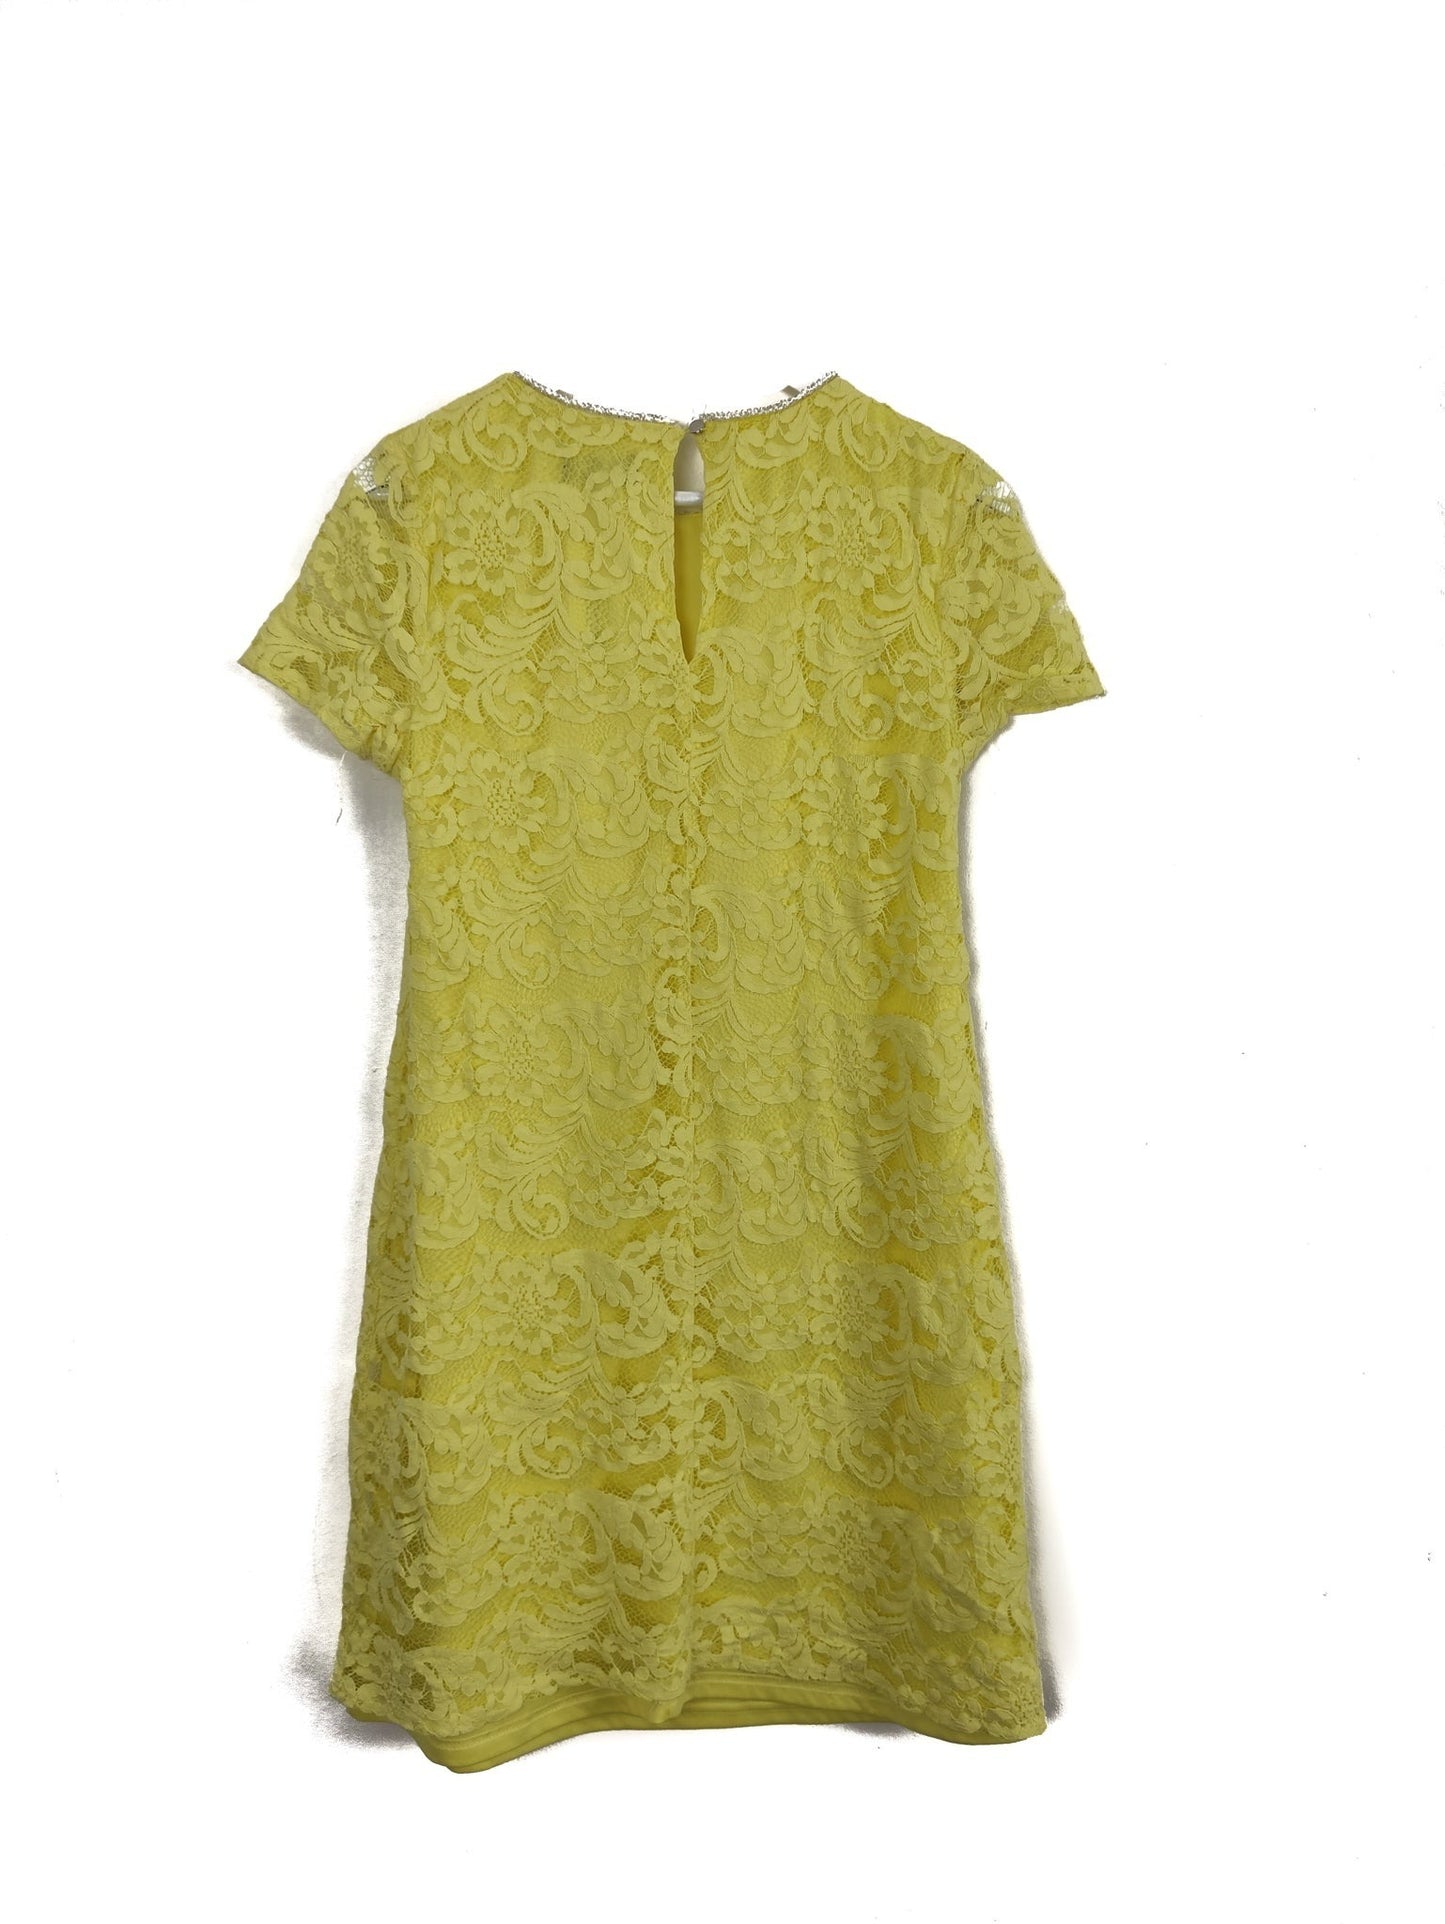 Vintage Φόρεμα YESSICA σε Κίτρινο Χρώμα με Δαντέλα (Medium)